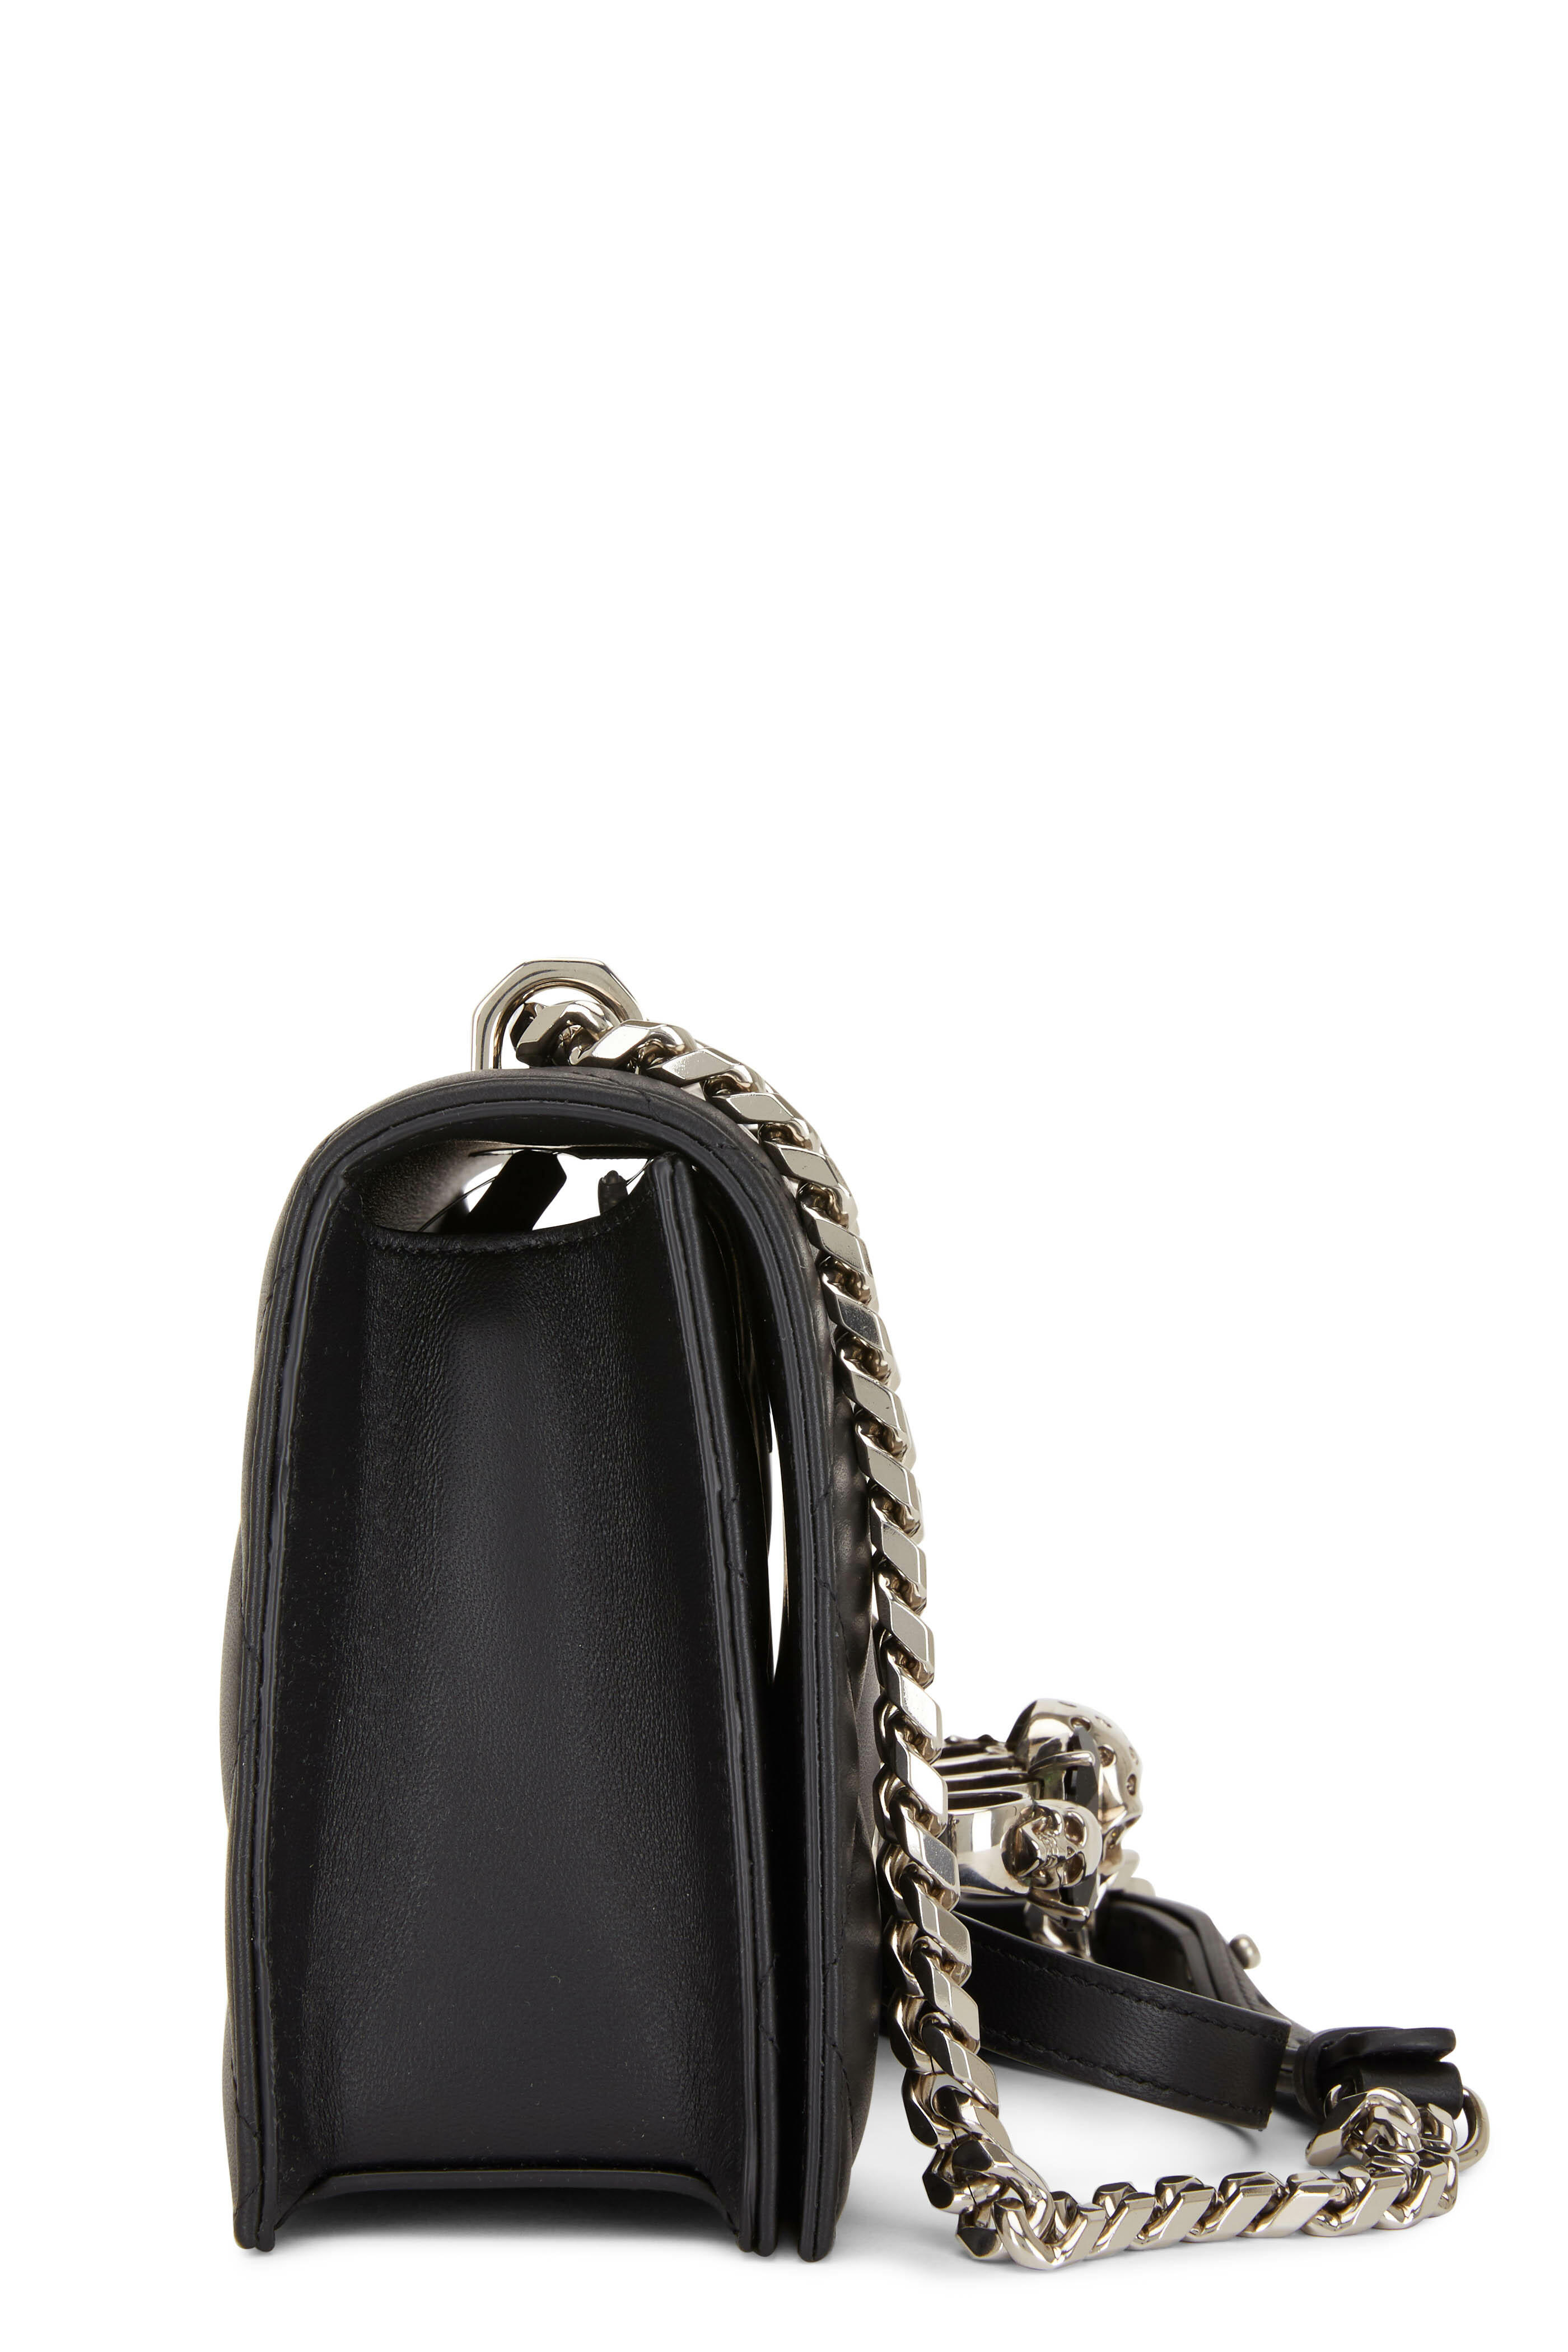 Black Quilted Leather With Swarovski Crystals Handbag